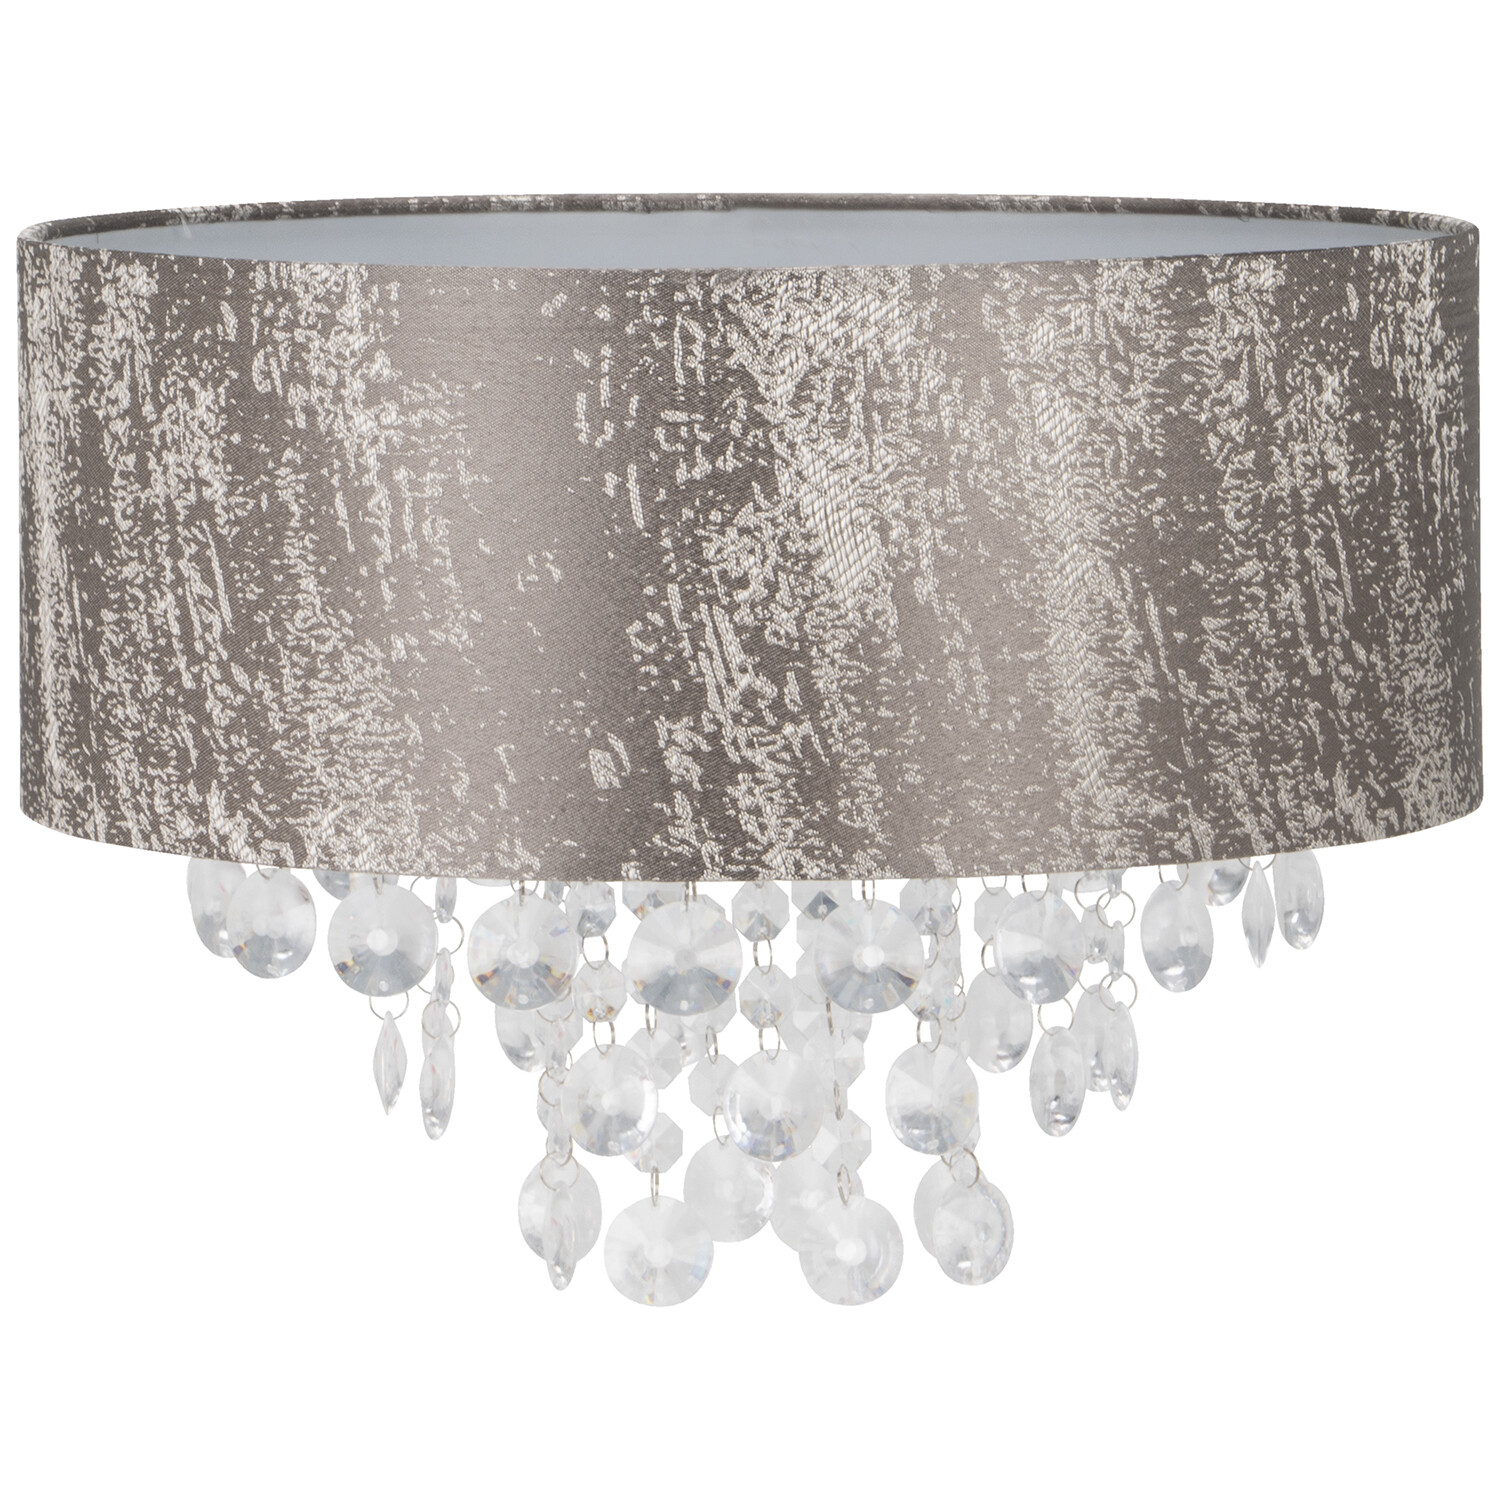 Grey Distressed Jewel Droplet Lamp Shade Image 1